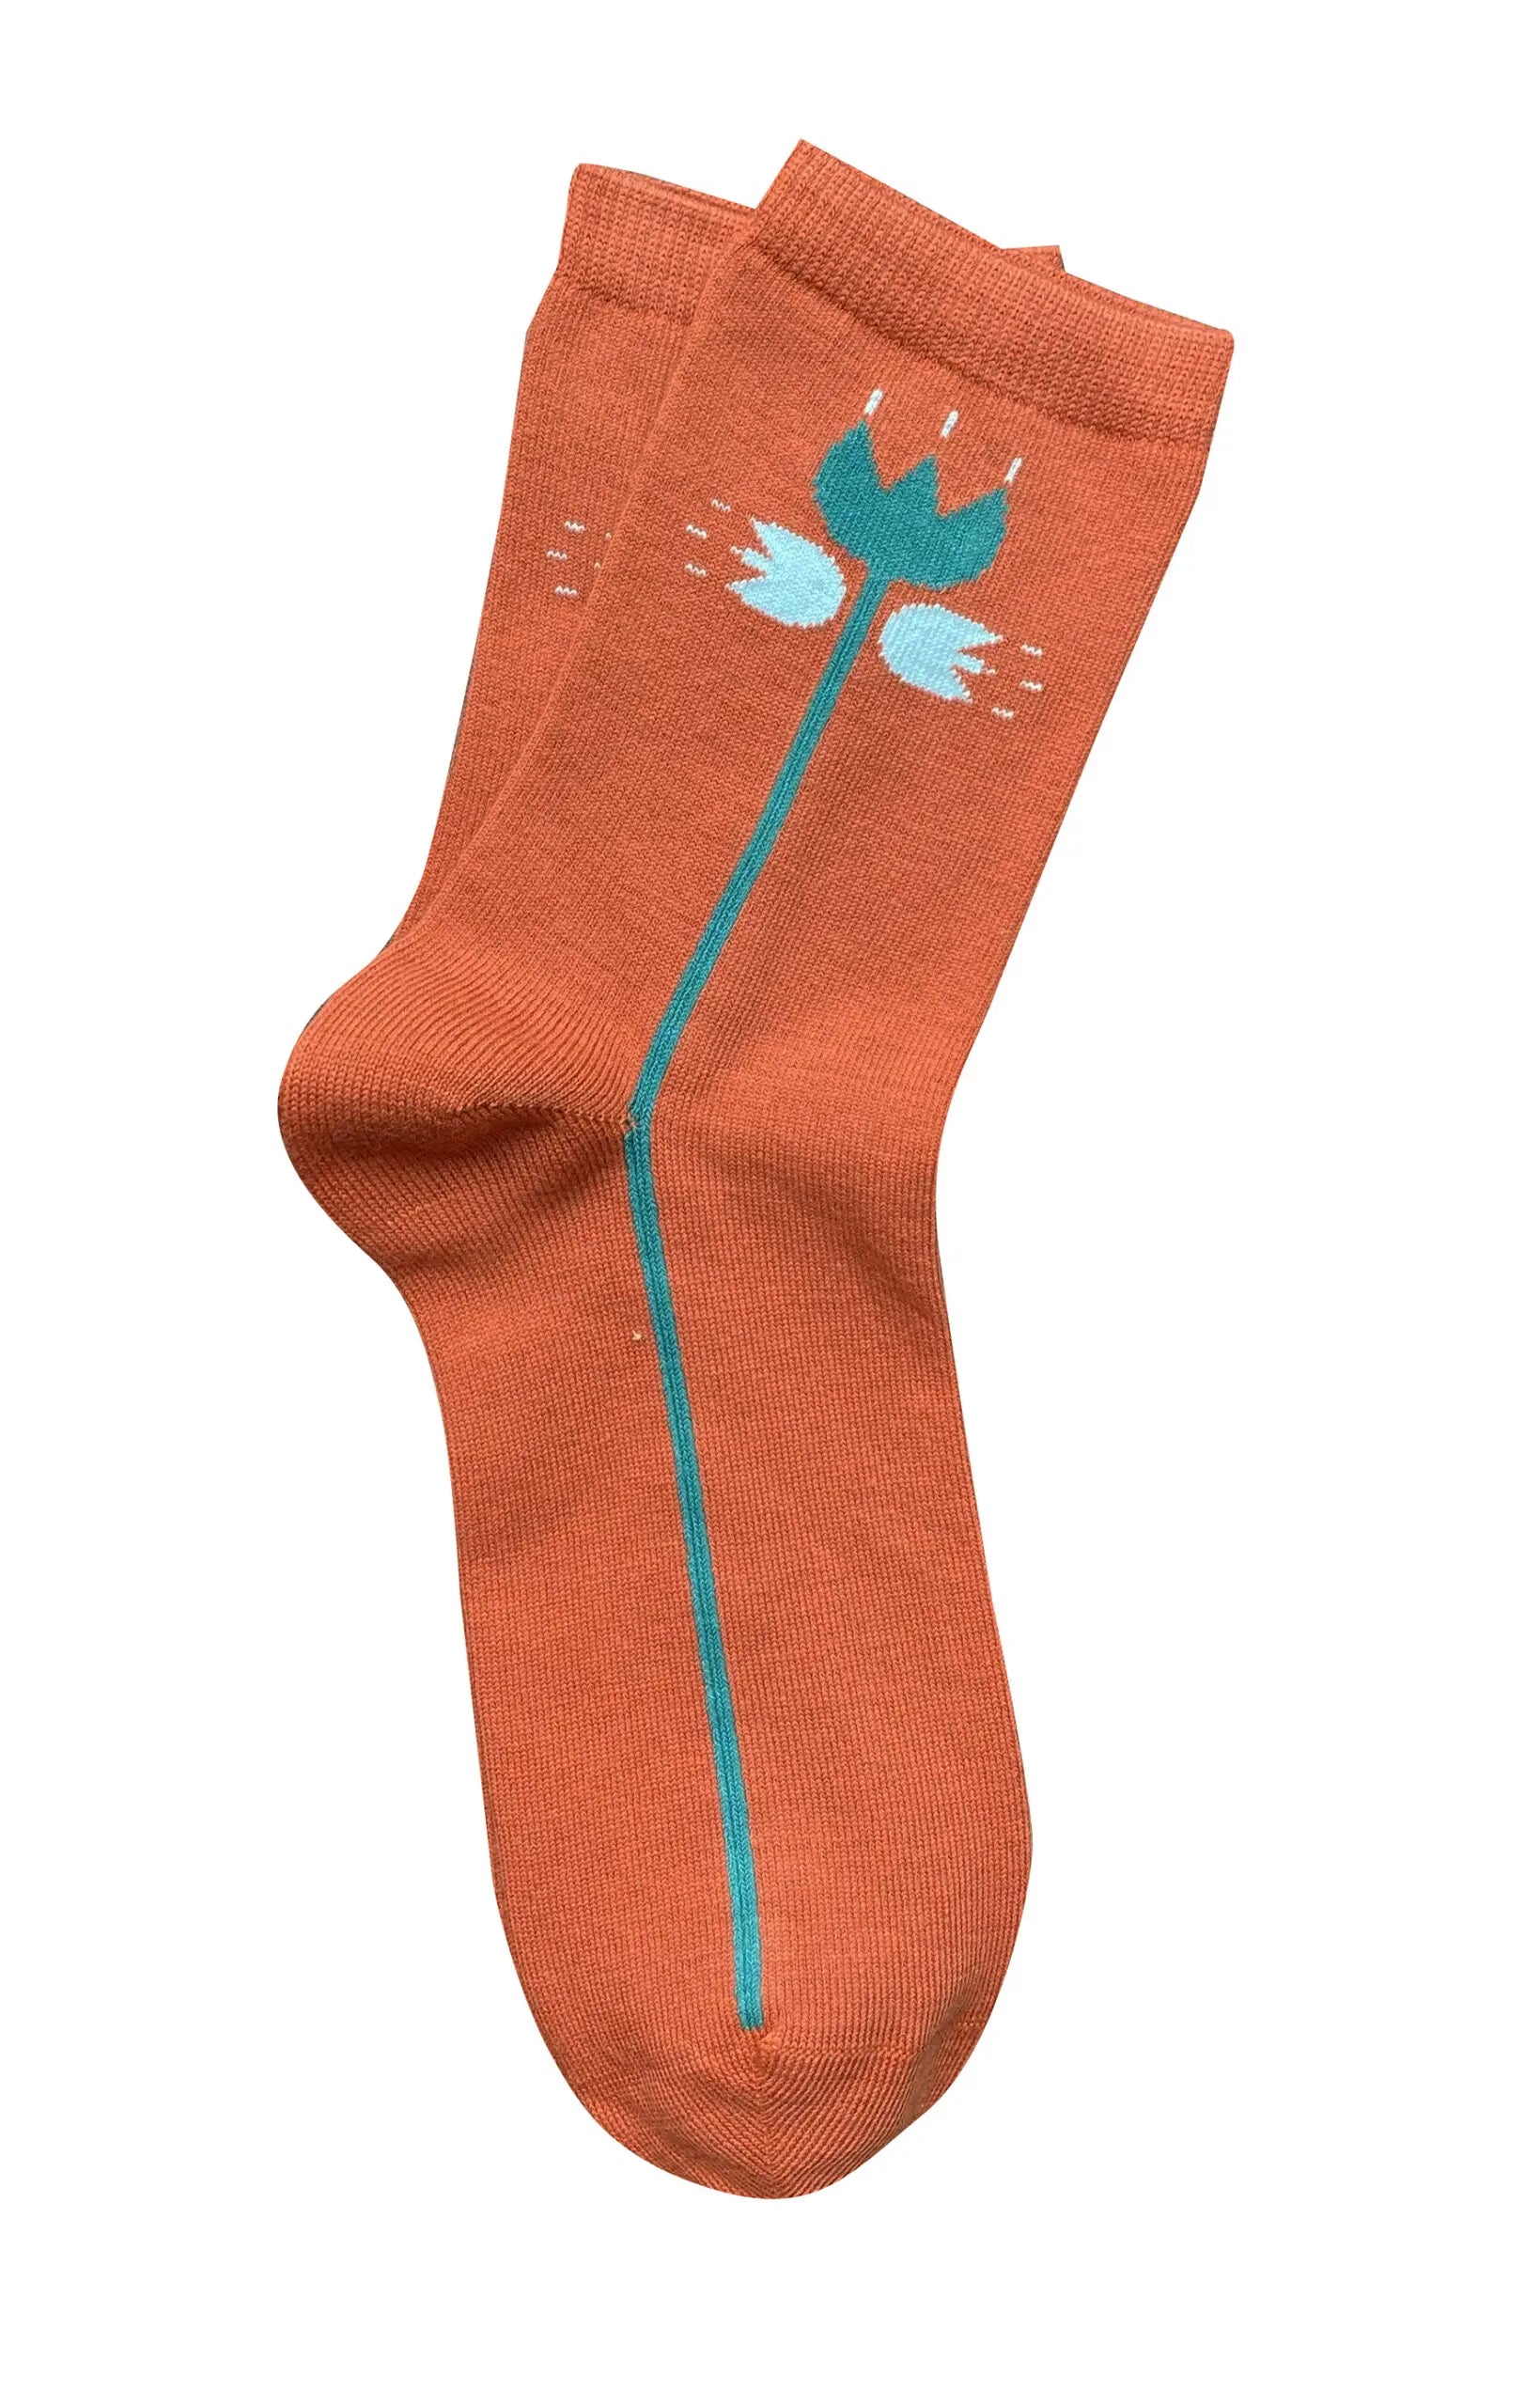 Fun Cotton Aussie Made Socks - Tightology socks Tightology Paprika One Size Flower